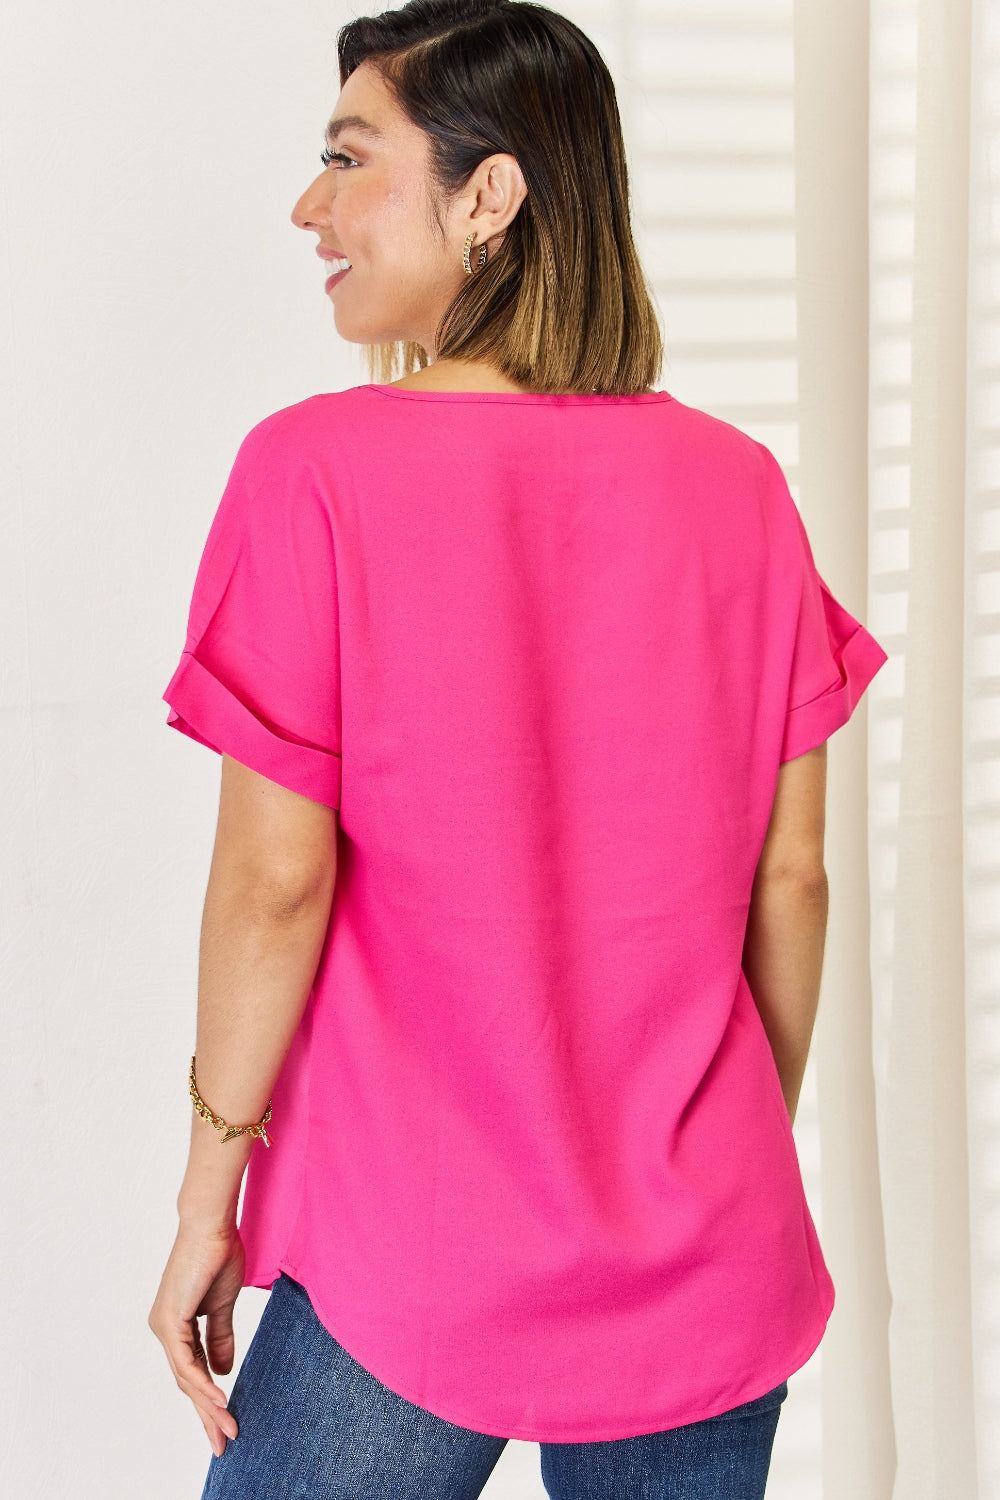 Zenana Short Sleeve Blouse - V-Neckline - Hot Pink - Inspired Eye Boutique